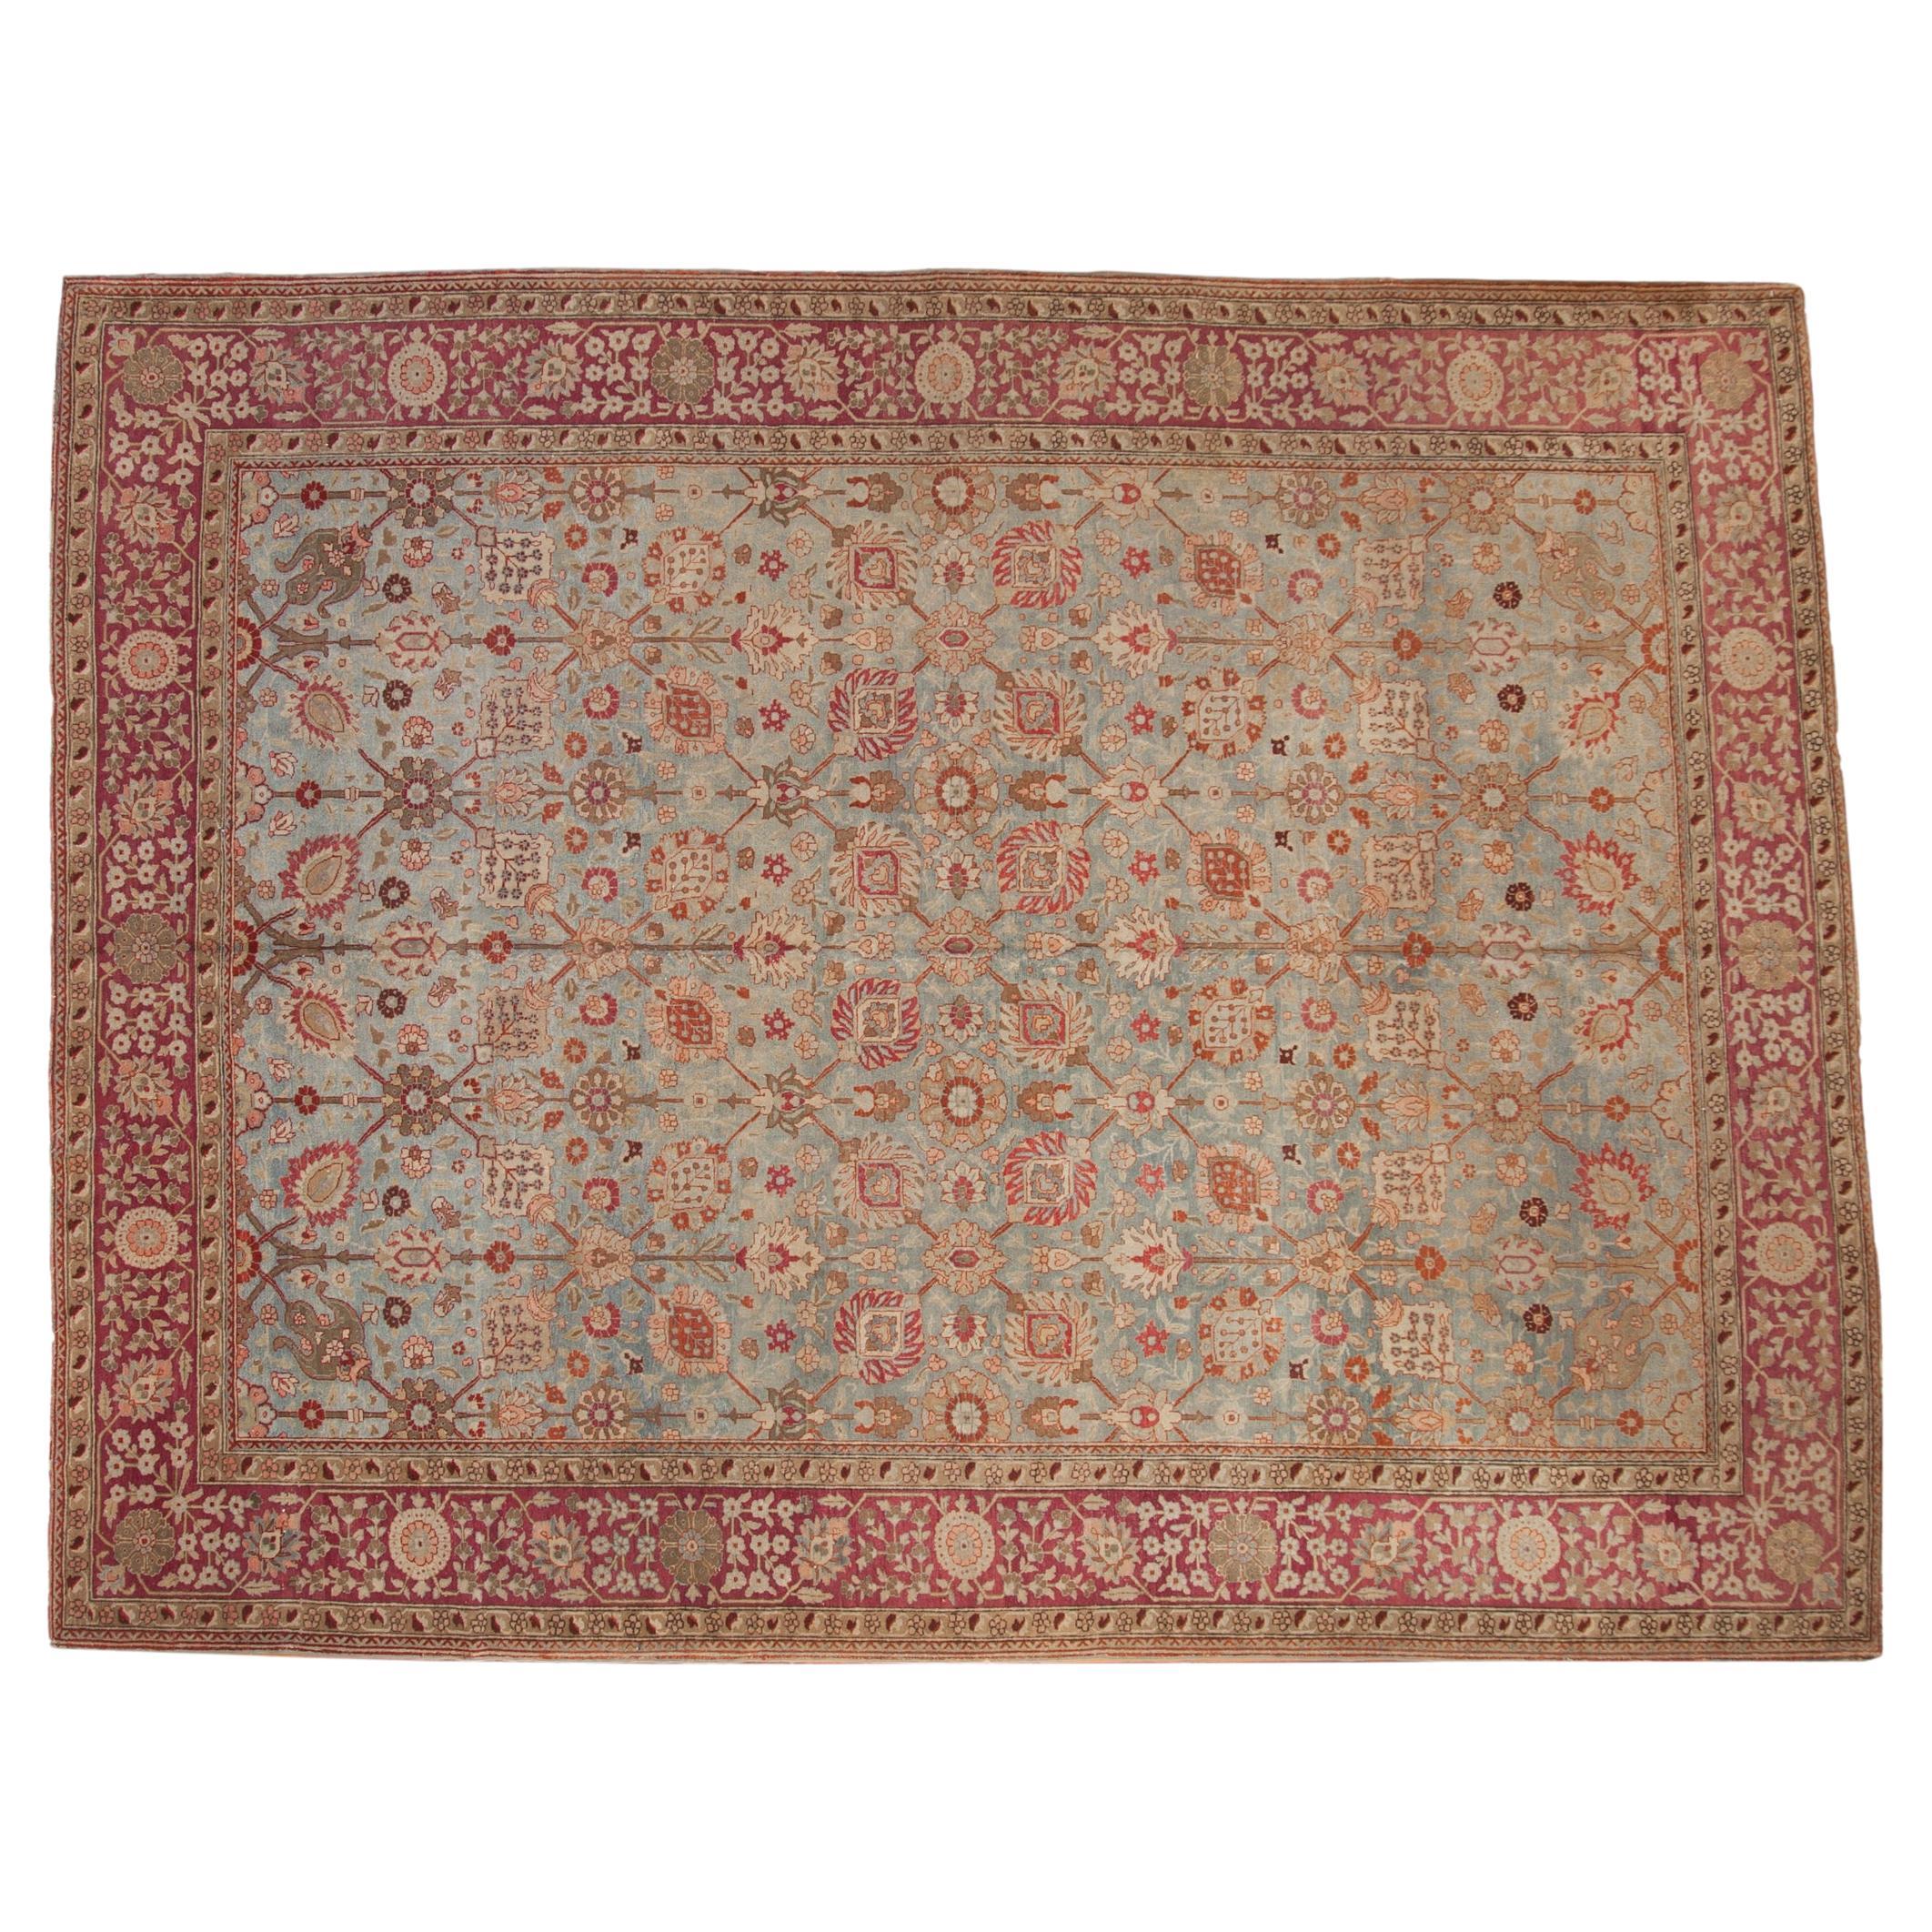 Antique Distressed Yezd Carpet